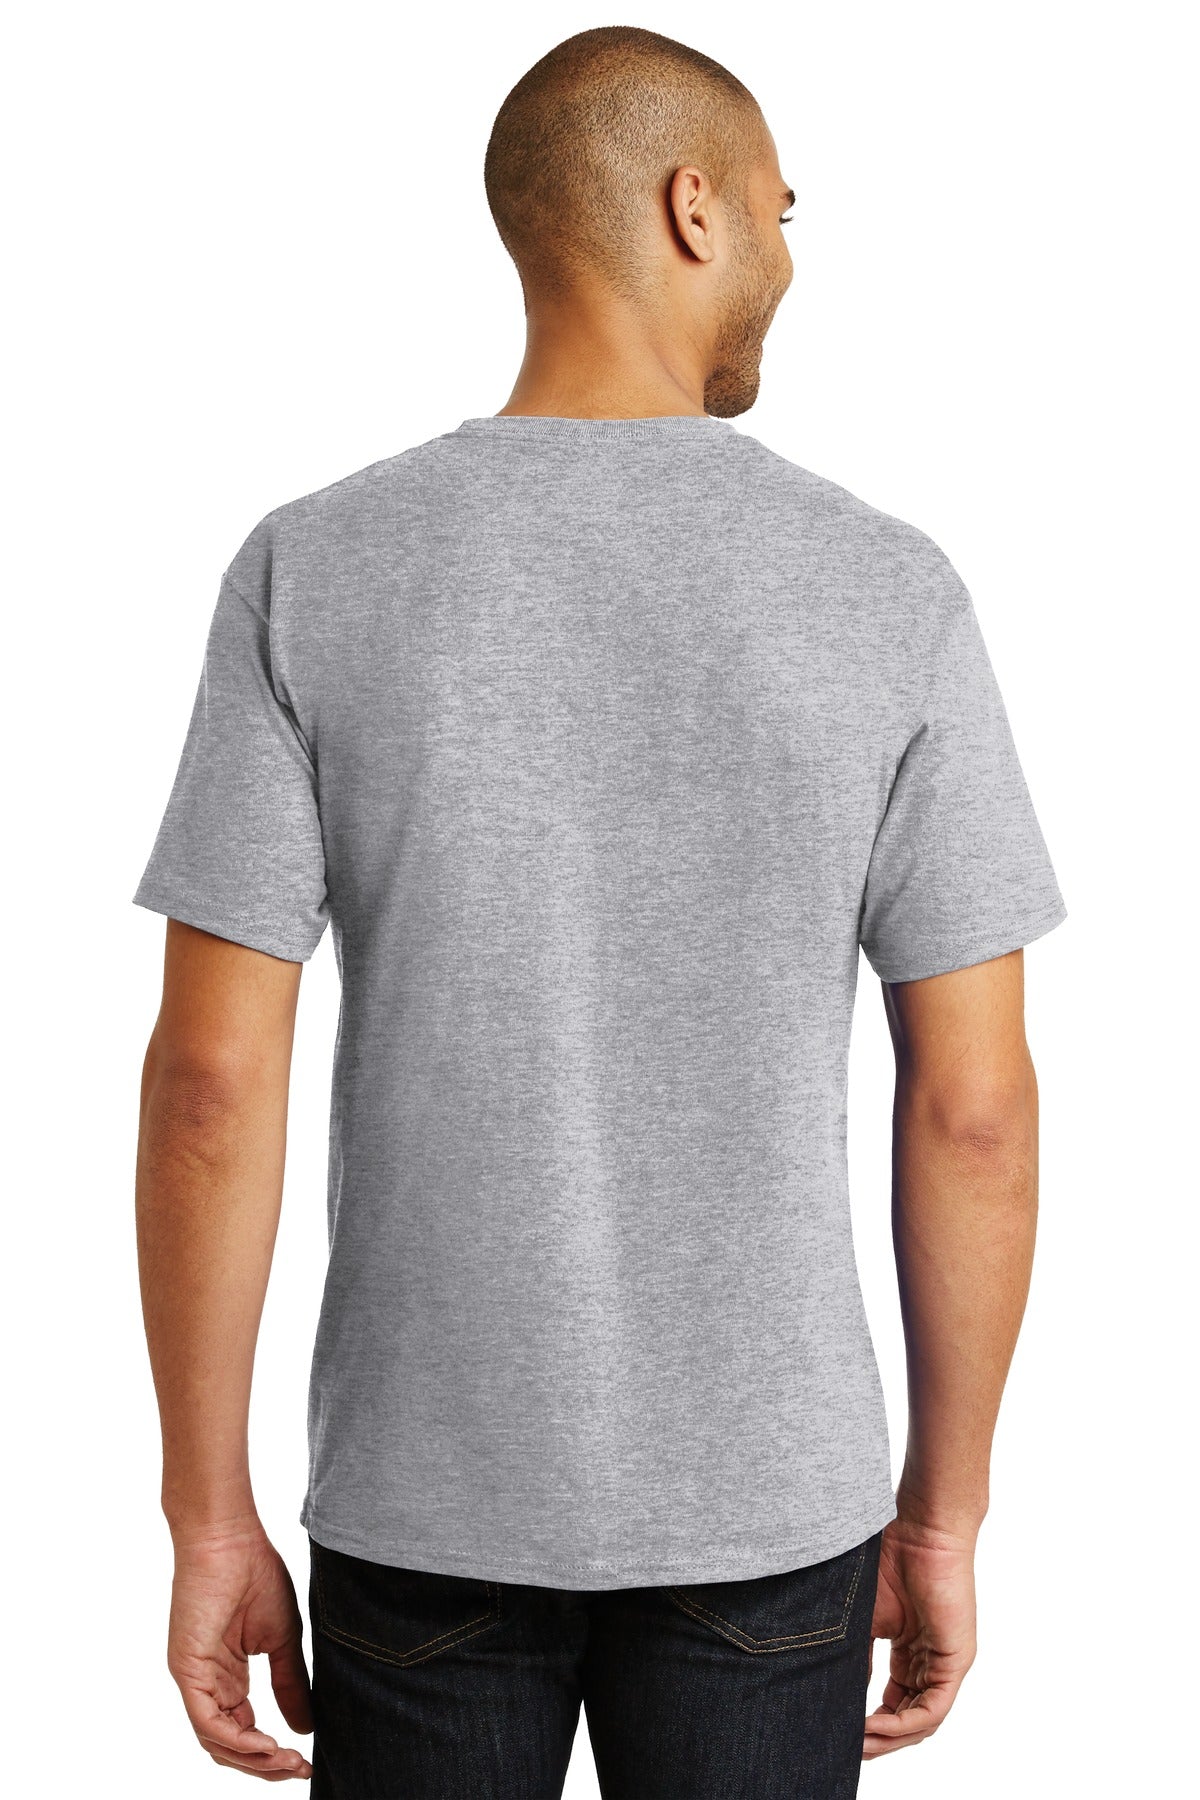 Hanes® - Authentic 100% Cotton T-Shirt. 5250 [Light Steel*] - DFW Impression